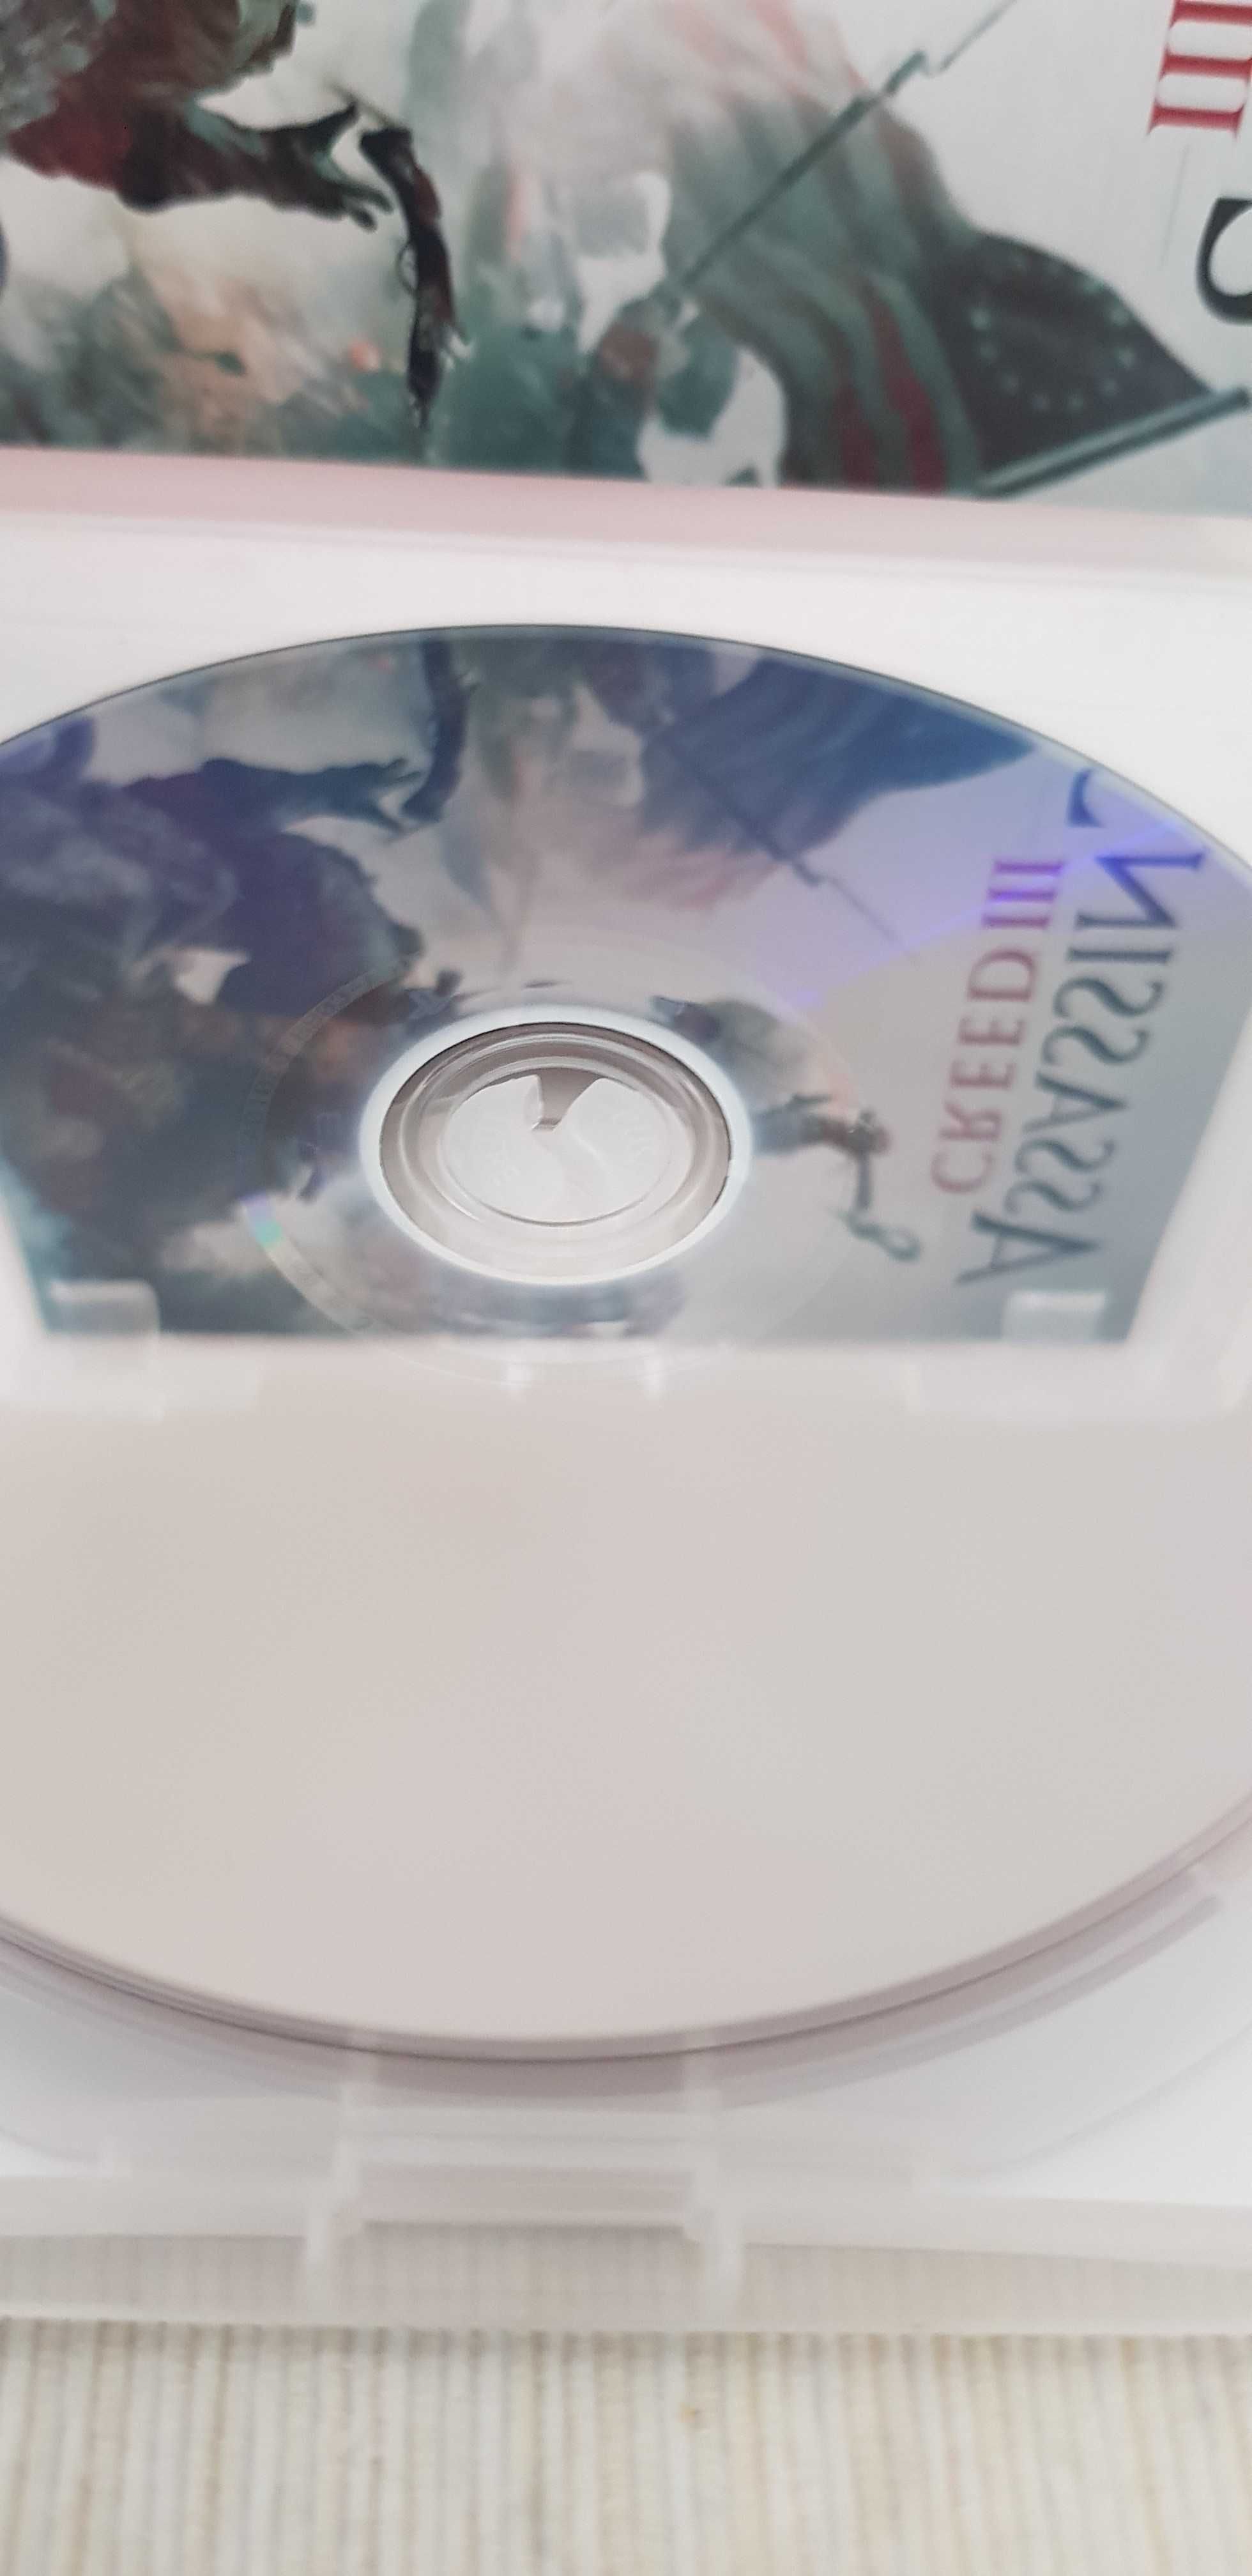 2 Gry PS3 - Assassins Creed I ANG i Assassins Creed III PL